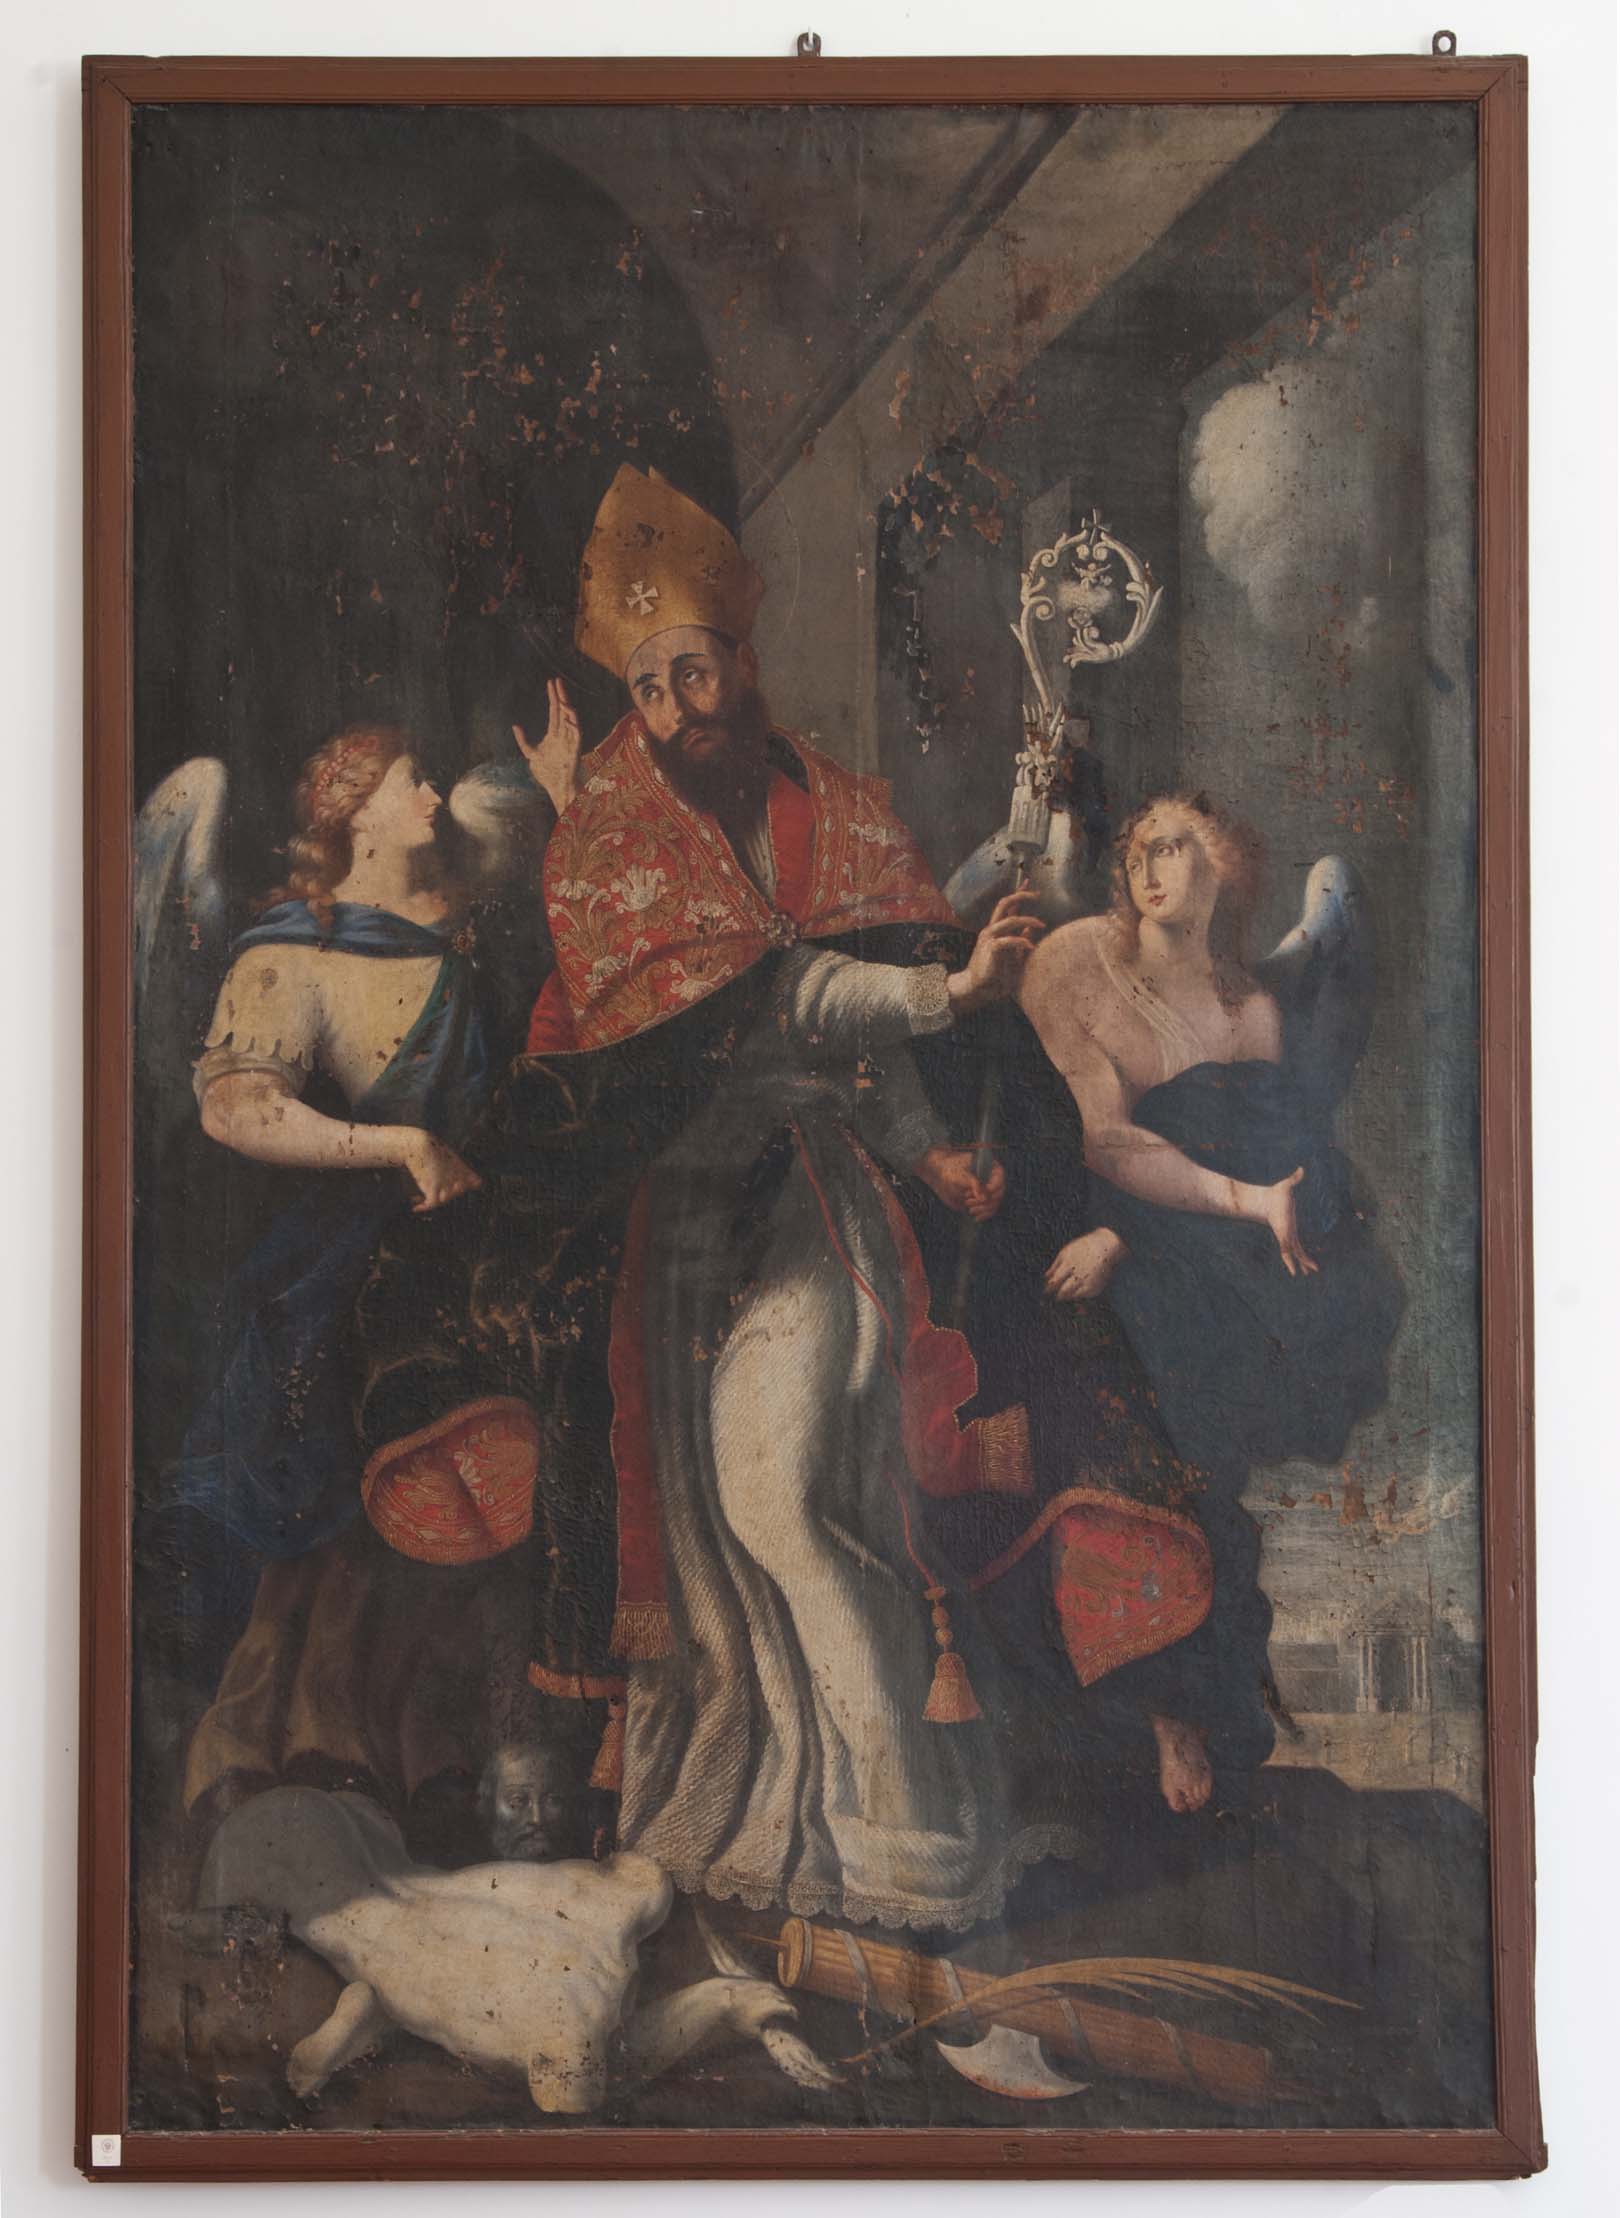 SANT'ORONZO (dipinto - dipinto su tela, opera isolata) di Ignoto (maniera) - ambito Italia meridionale (XVIII)